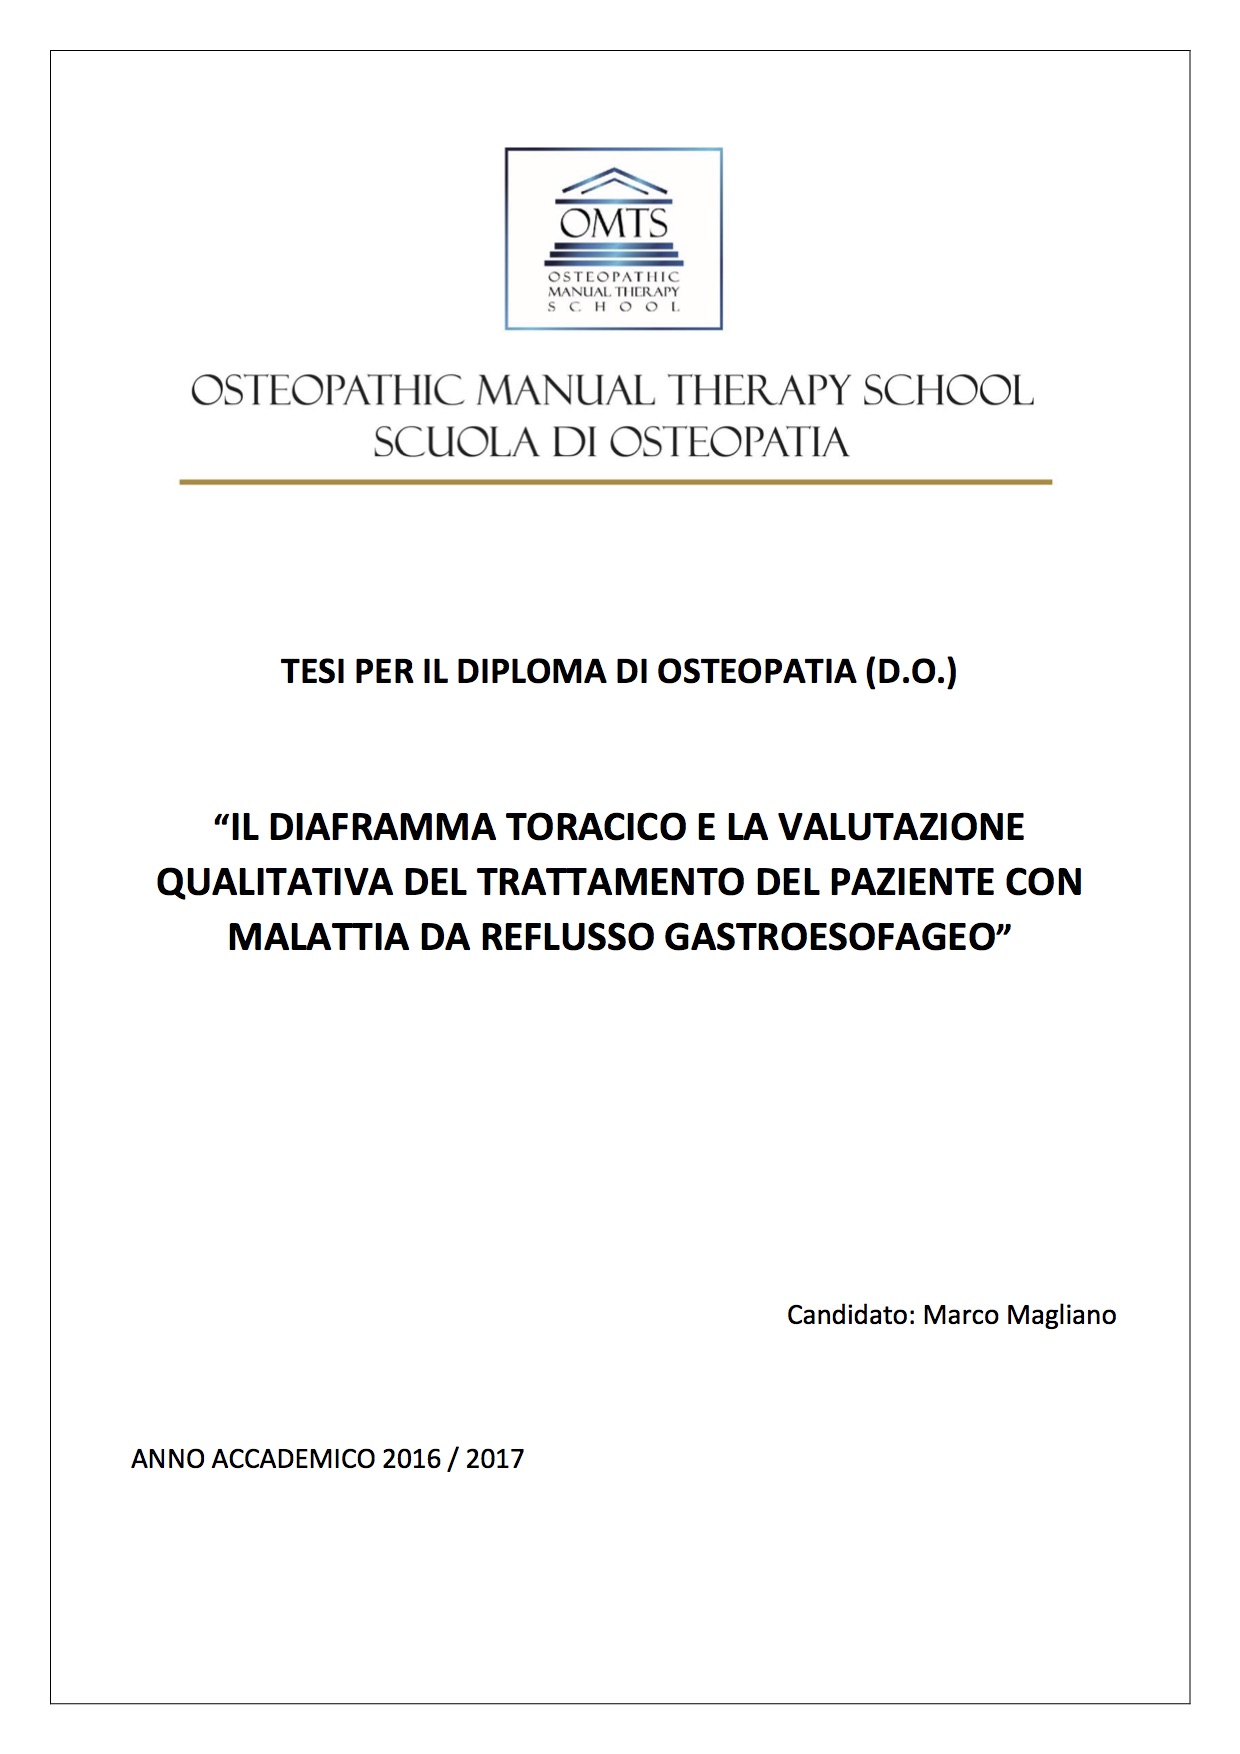 Marco Magliano Tesi Diploma Osteopatia 2017